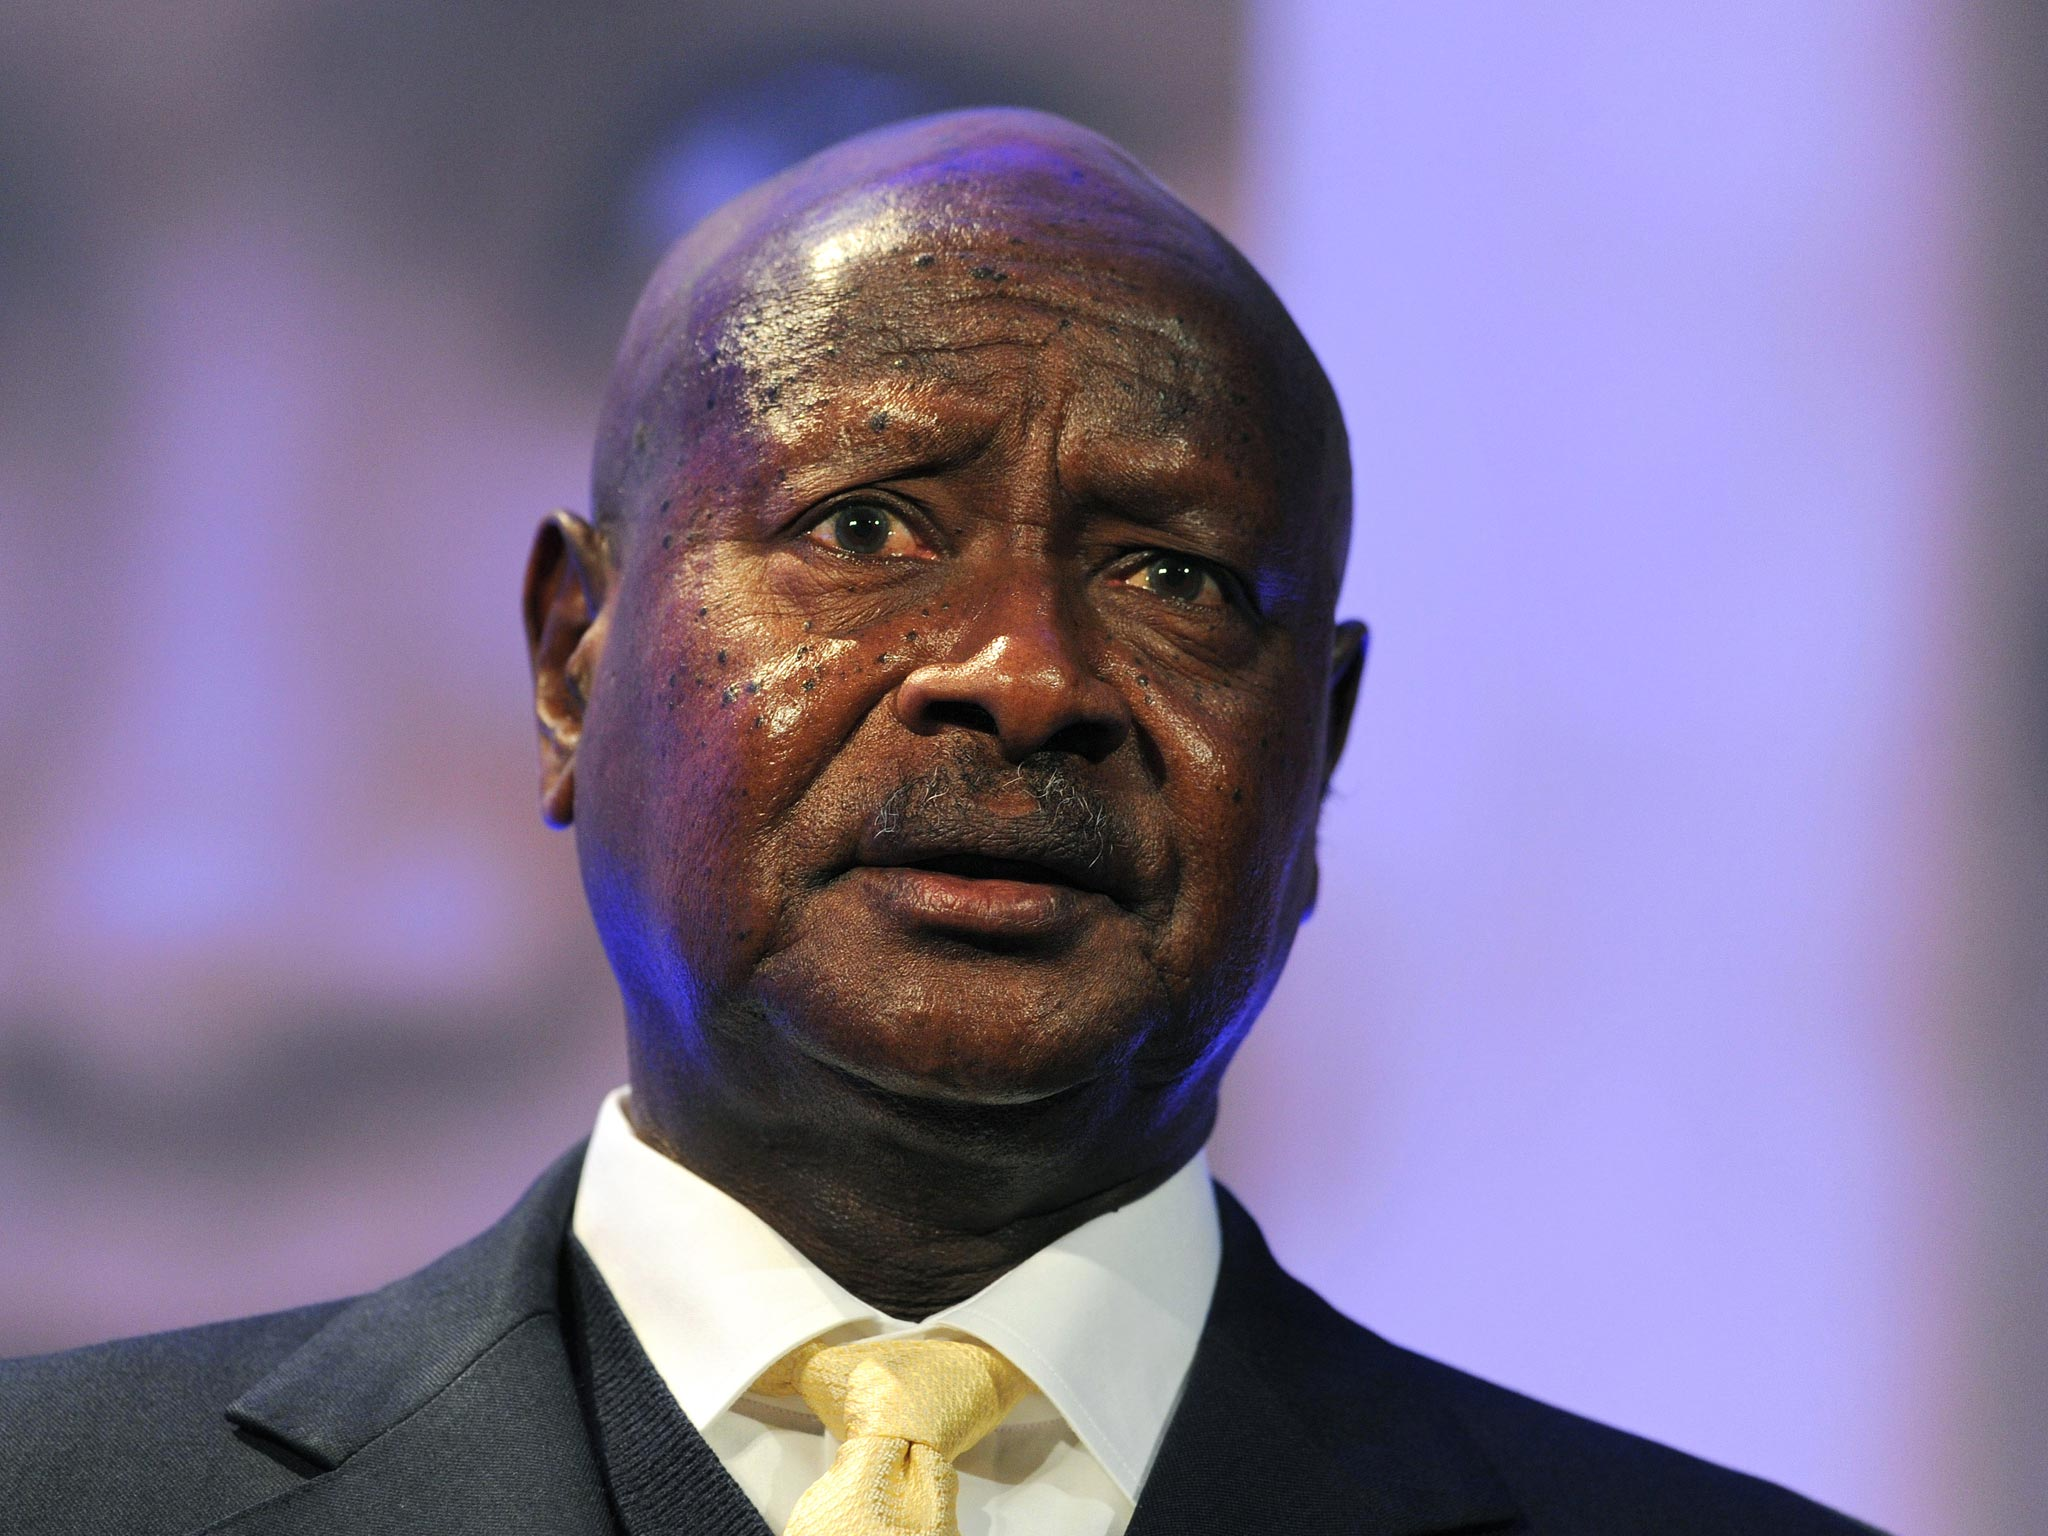 Ugandan President Yoweri Museveni signed the anti-gay bill lin February